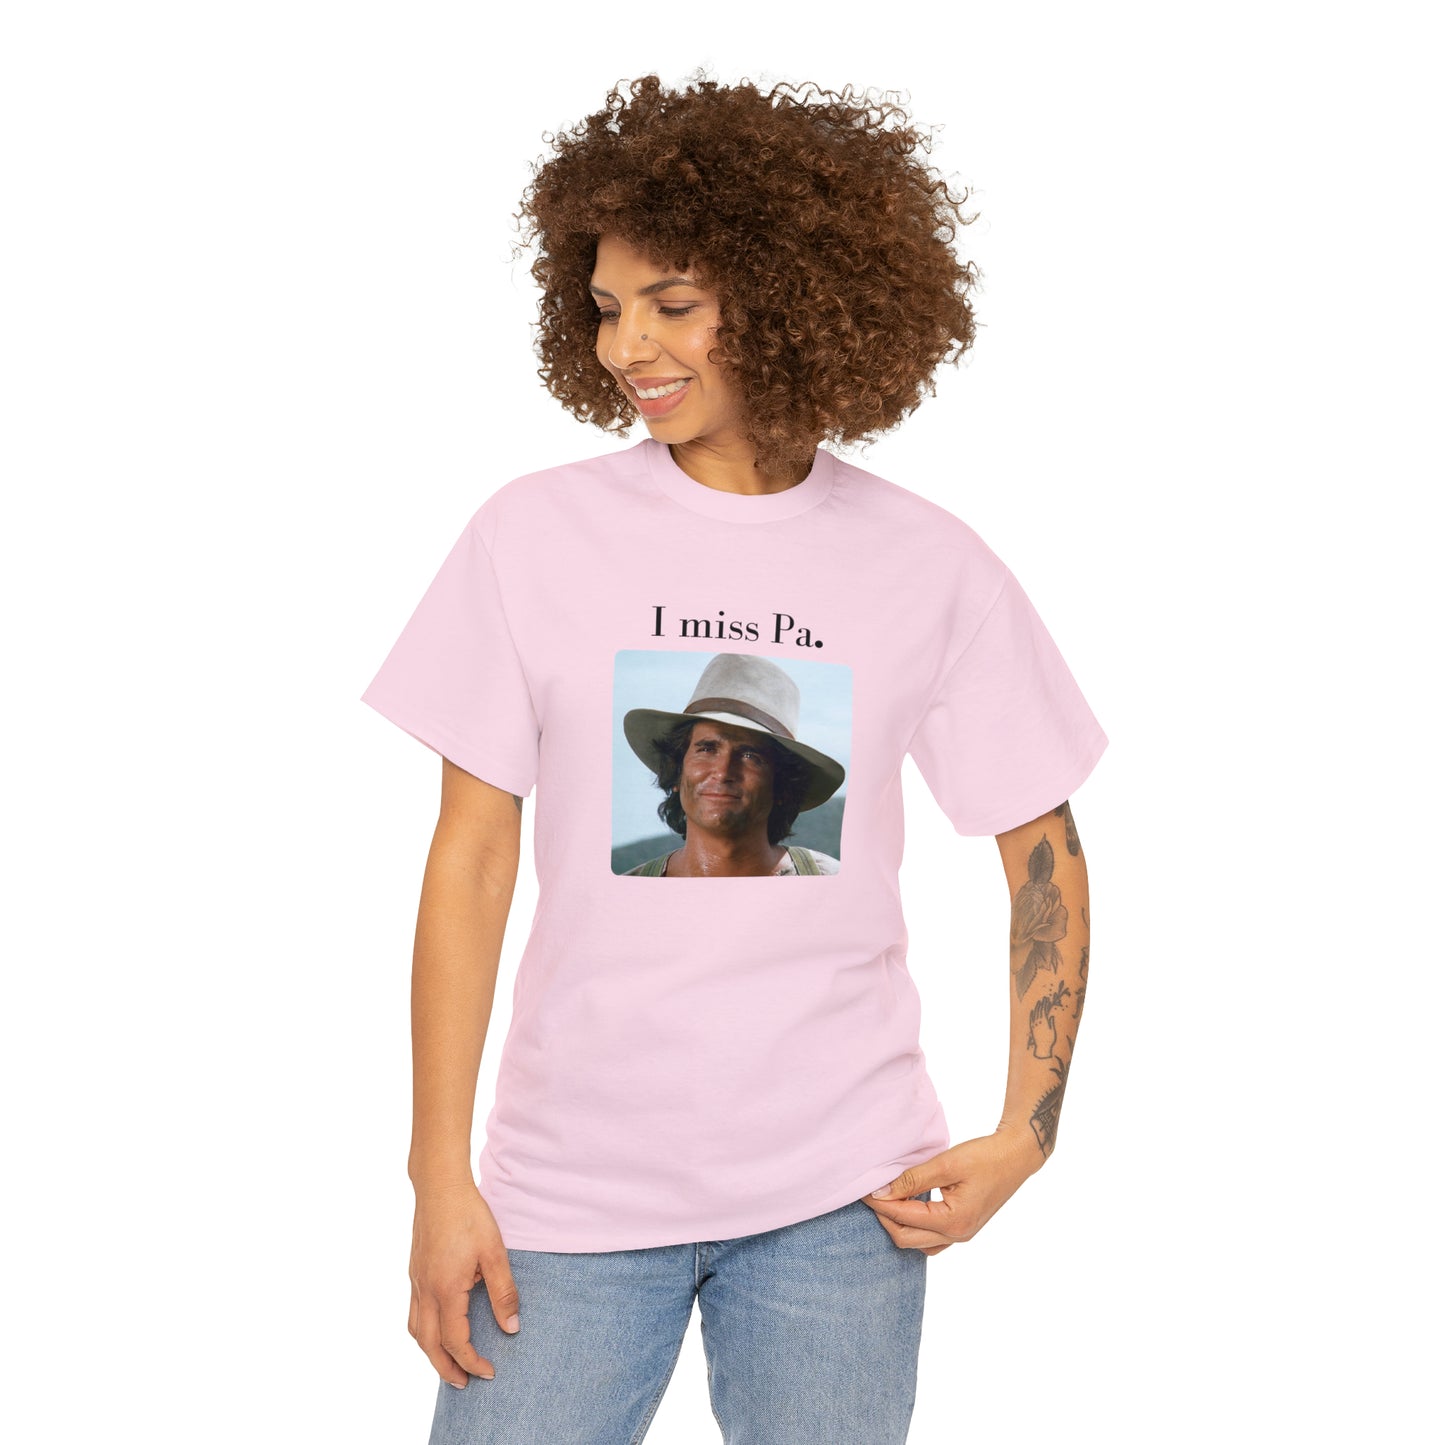 I miss Pa. (Michael Landon) (Little House on the Prairie) Unisex Heavy Cotton Tee (t-shirt)